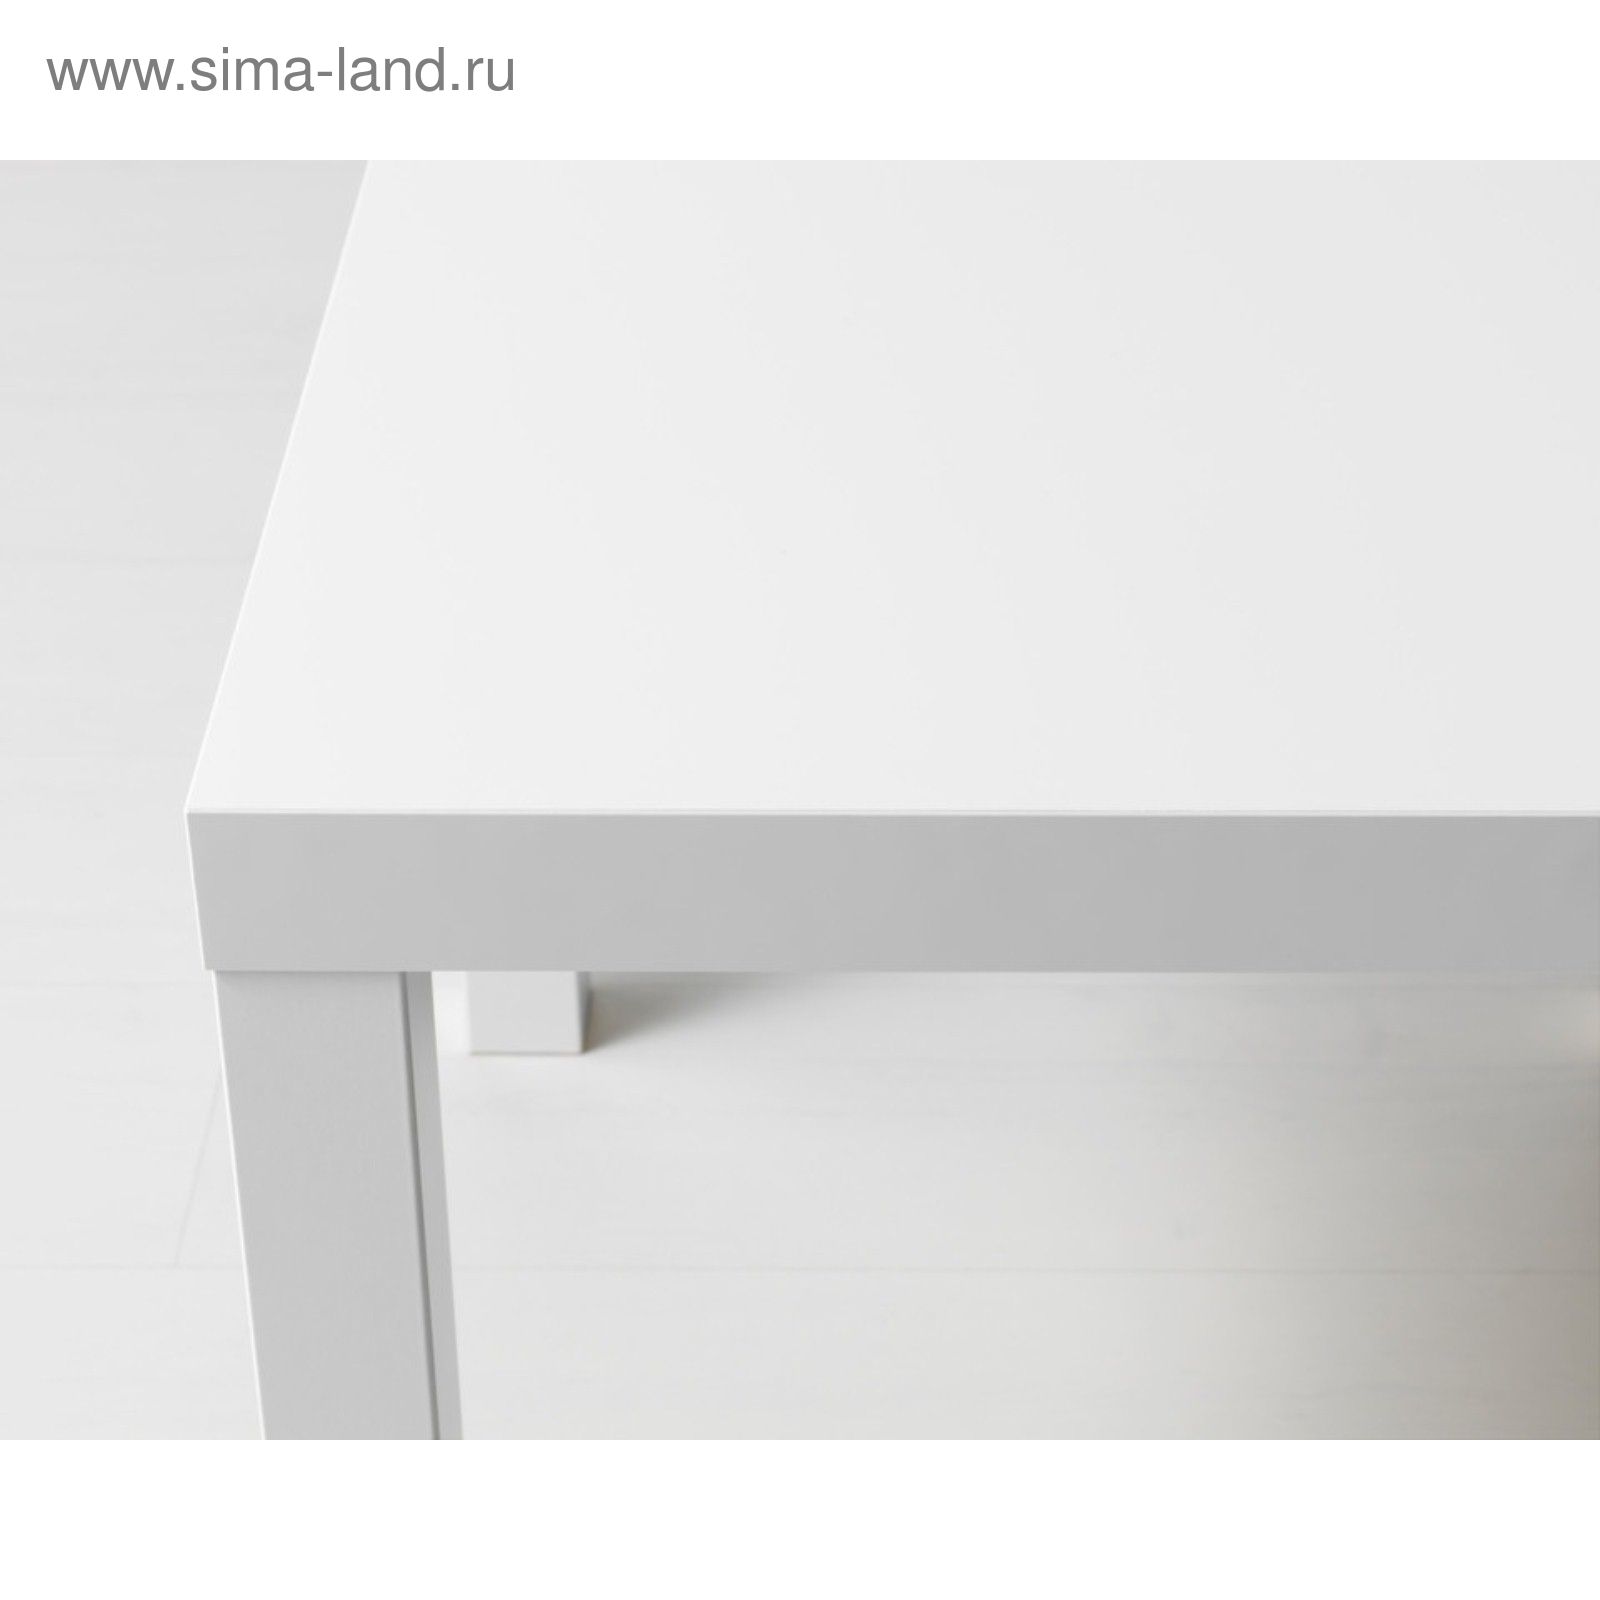 Lack ЛАКК придиванный столик, белый55x55 см